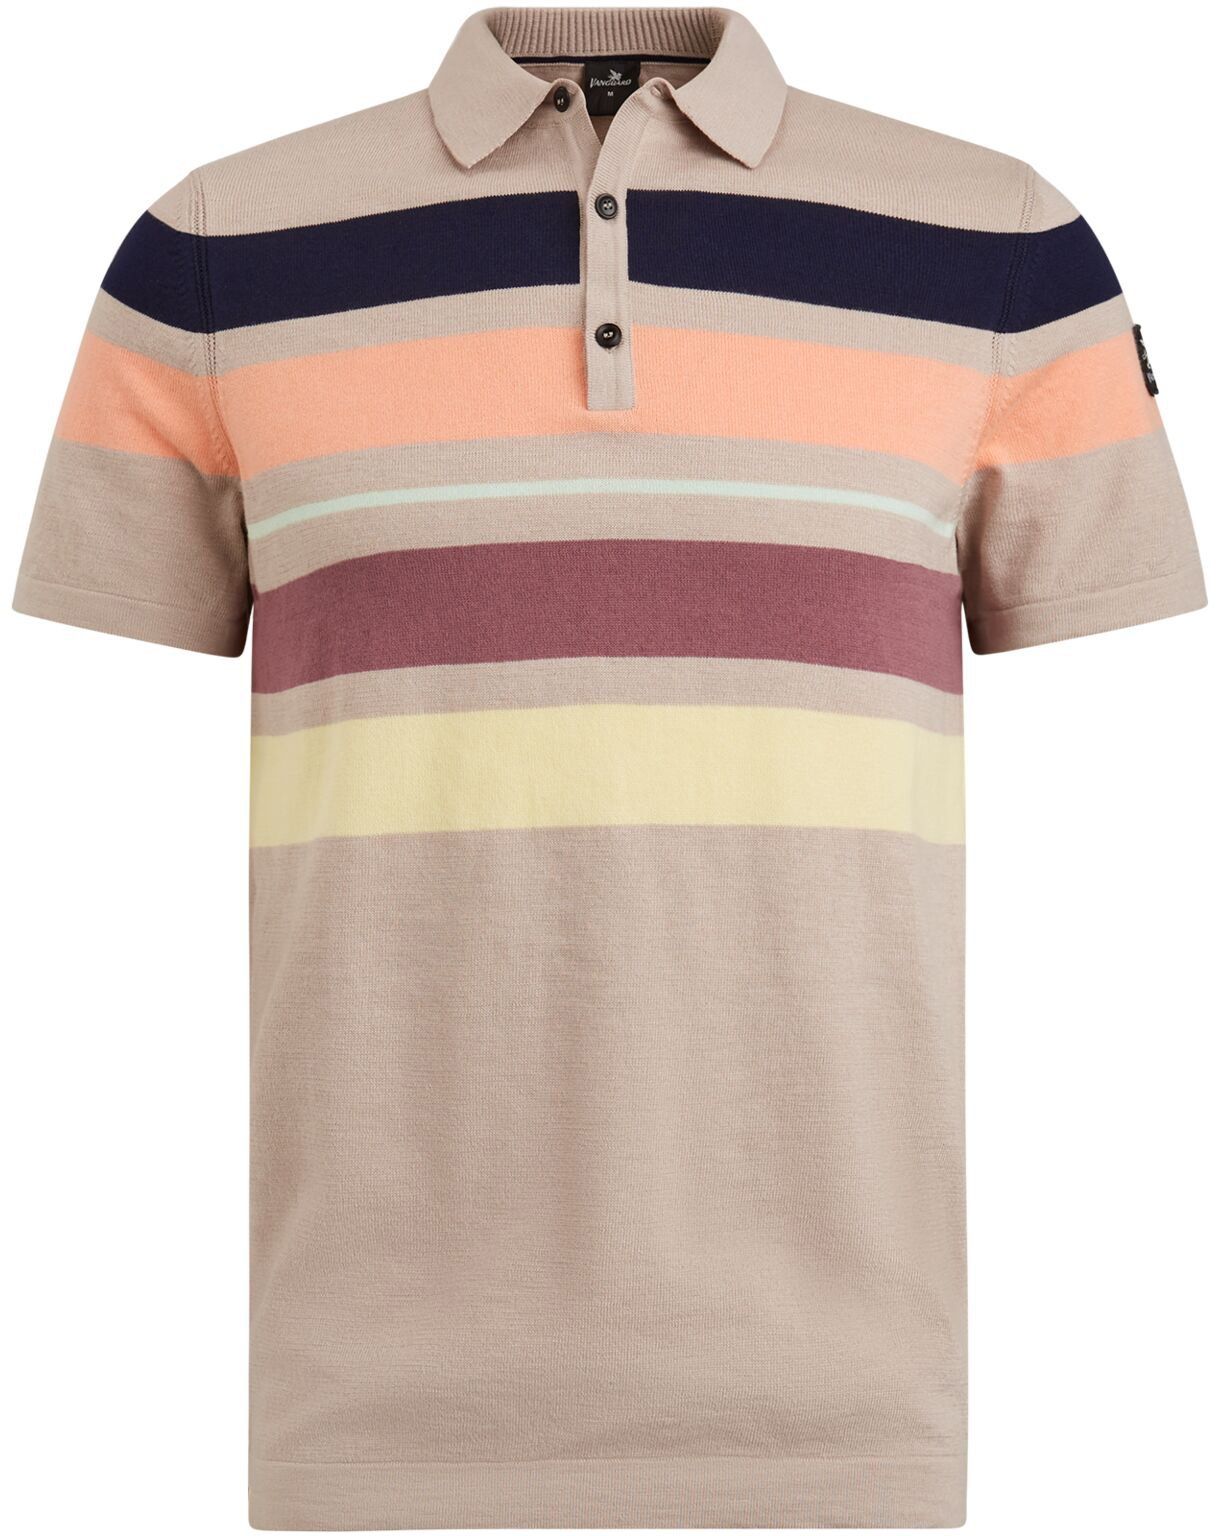 Vanguard Knitted Polo Shirt Beige VPSS2304868-8265 order online 